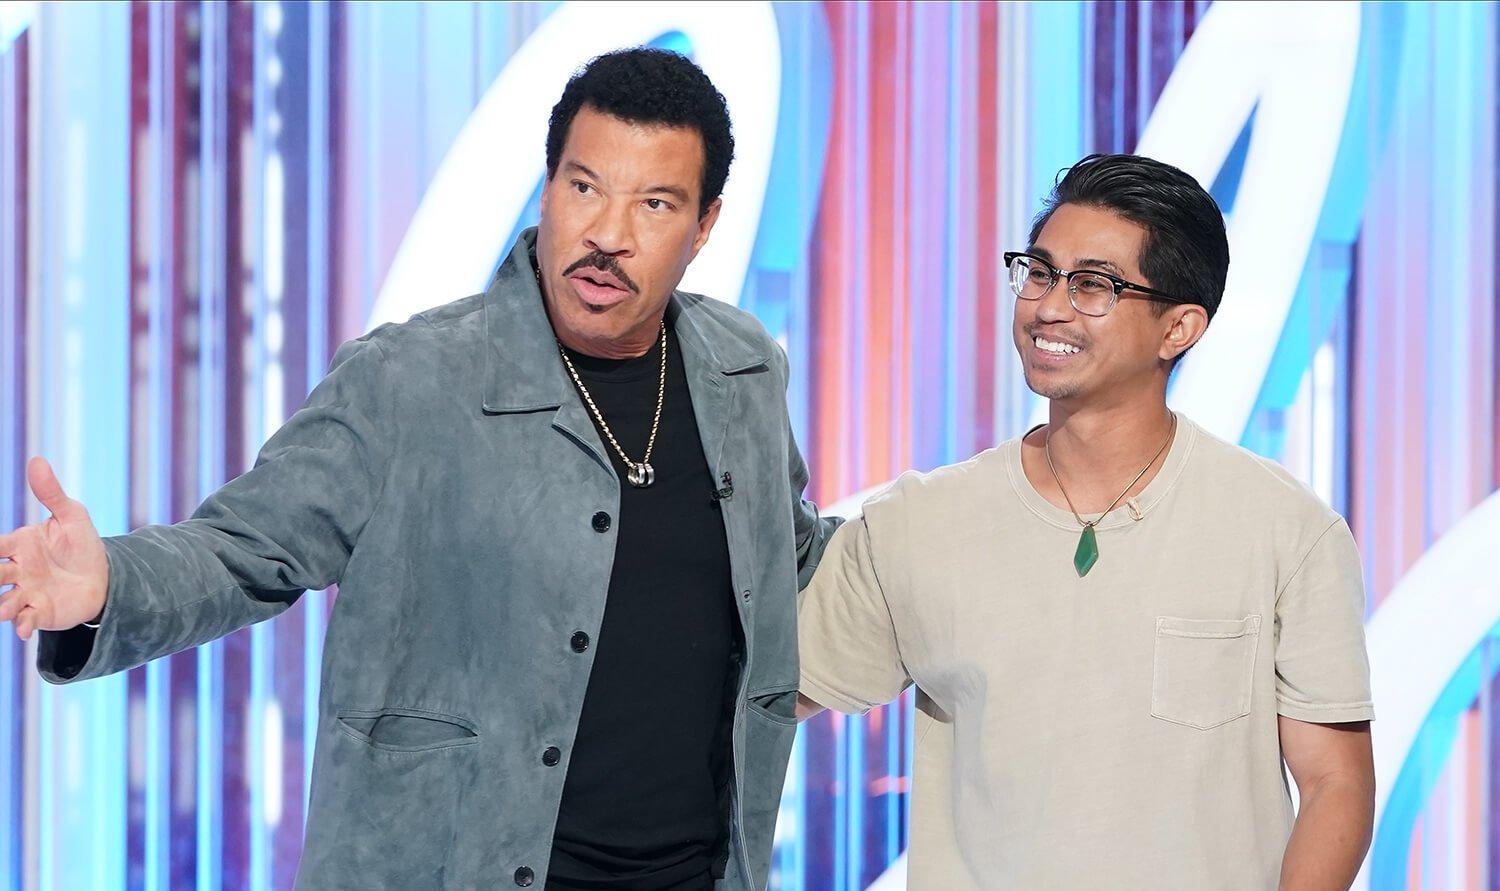 Lionel Richie and Lionel Richiee, a.k.a. L-Rich, on American Idol Season 21 premiere